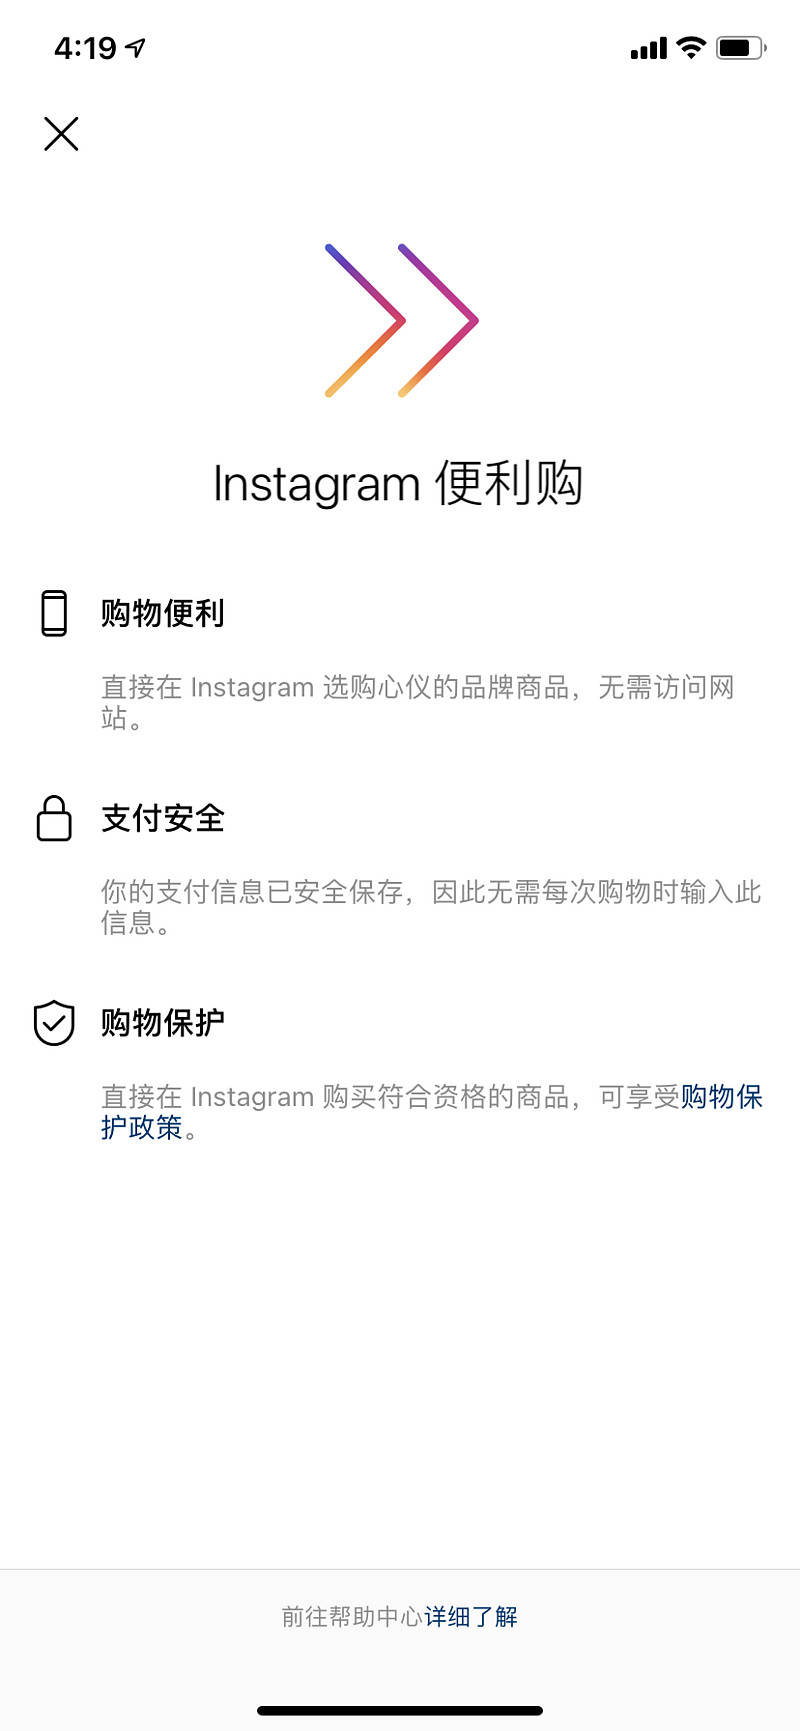 Instagram购物功能 Dtc的潜力很大 Facebook Fb Shopify Inc Shop